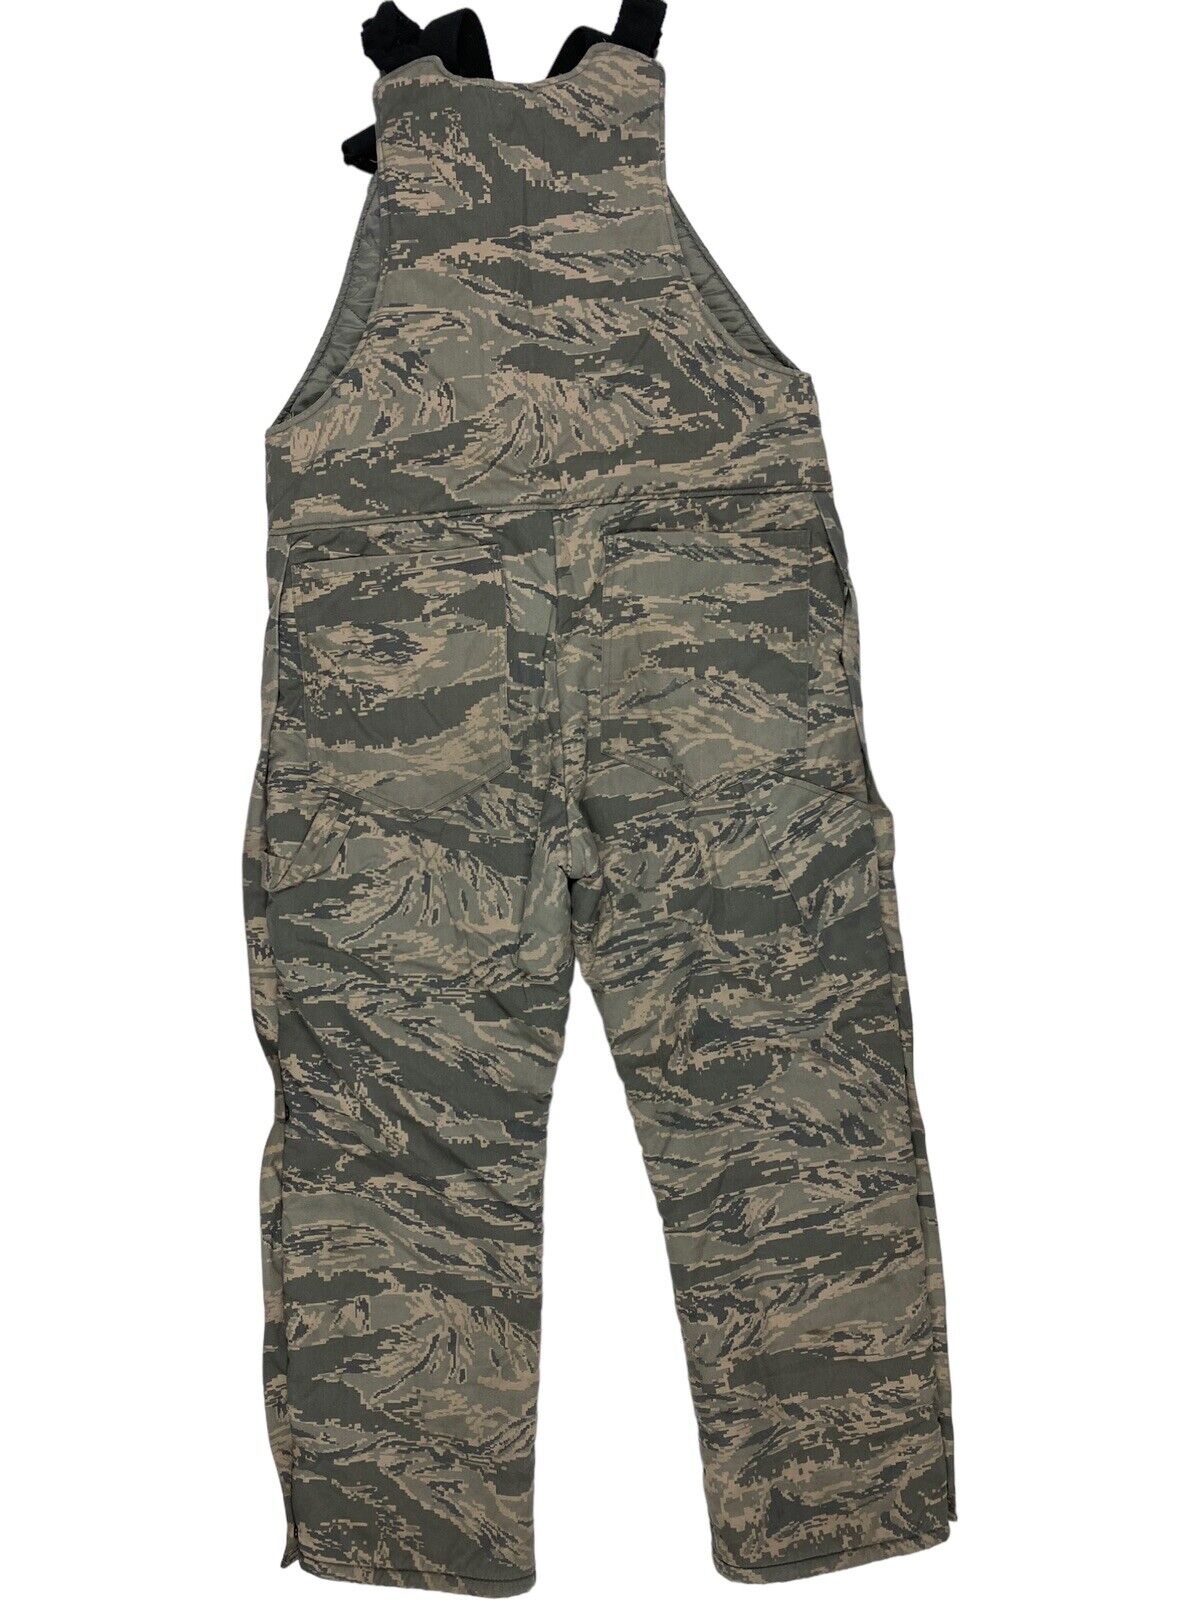 ABU Insulated Bibs Small Short USAF Winter Bib Overalls USGI Dakota Outerwear